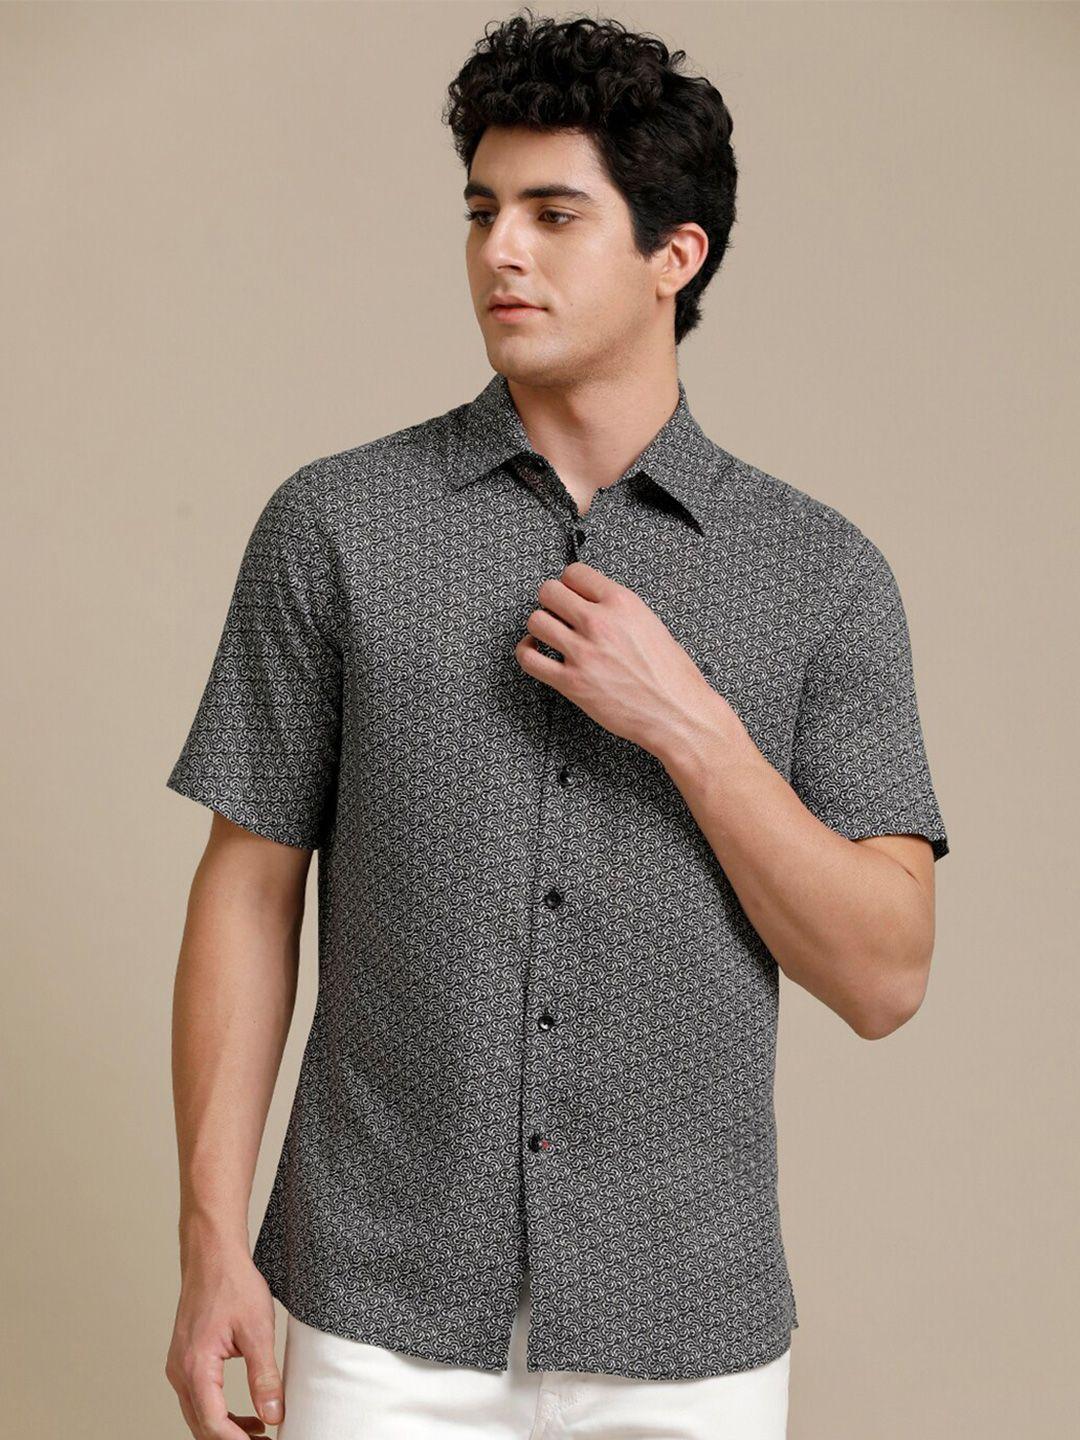 aldeno comfort geometric printed casual shirt